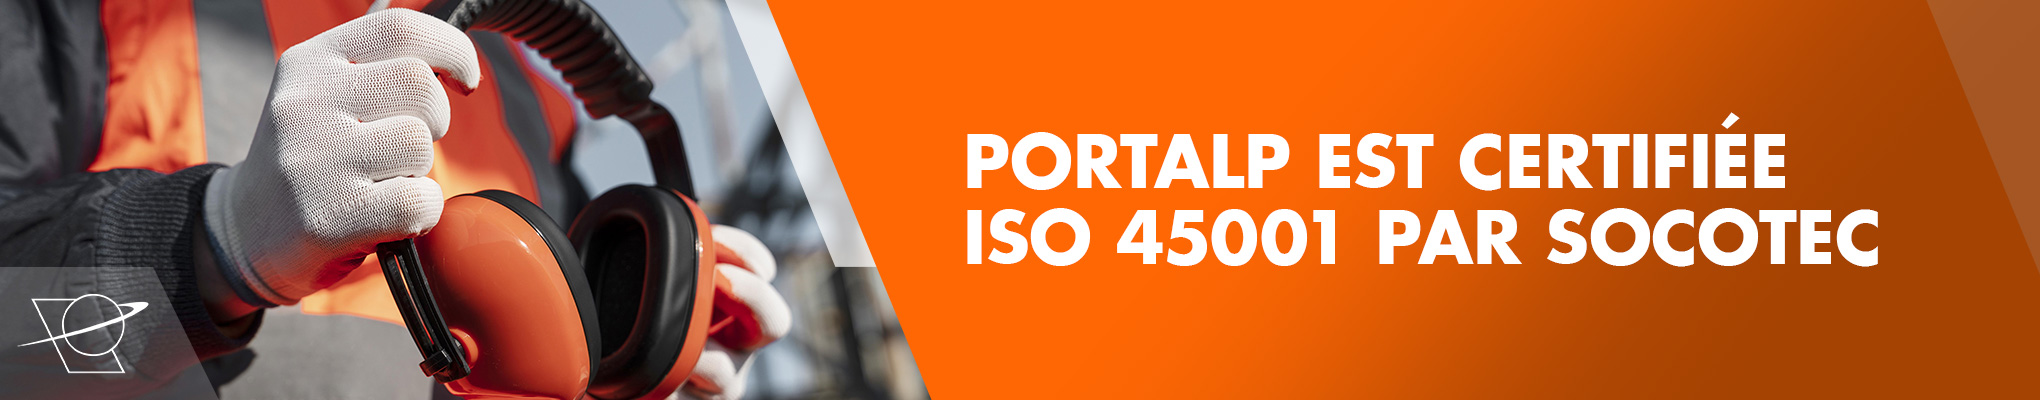 Portalp obtient la certification ISO 45001